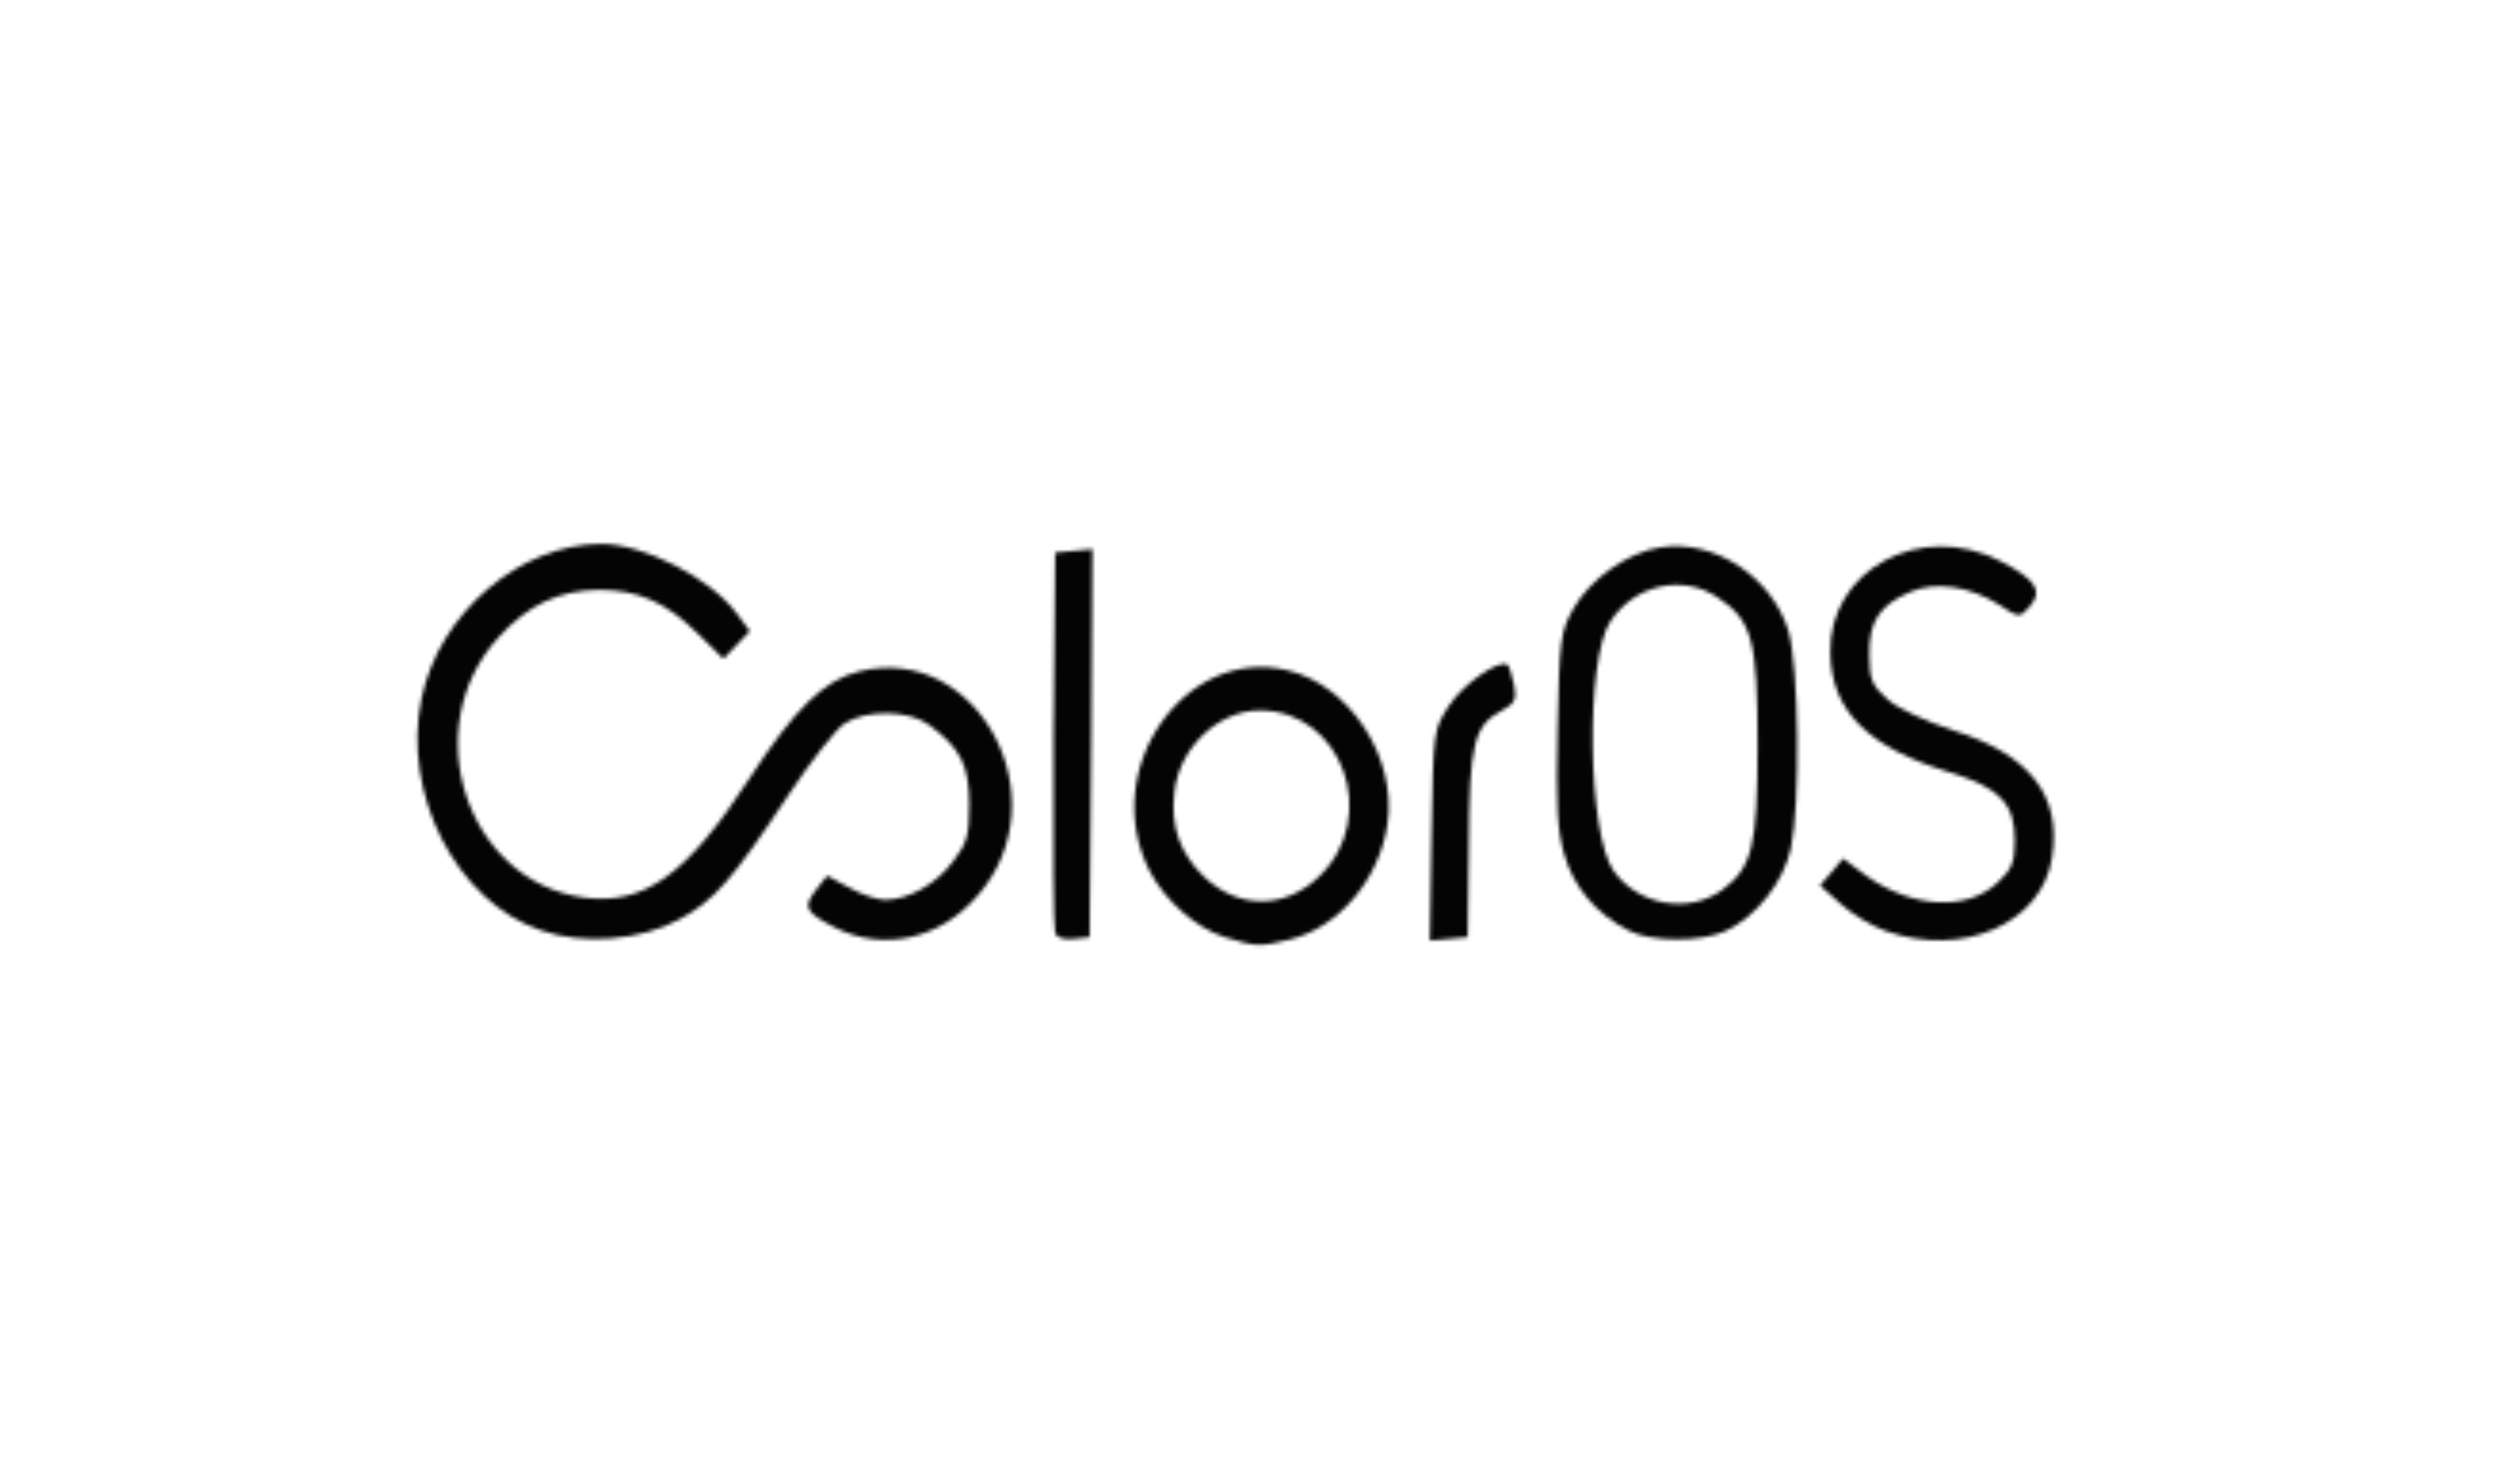 ColorOS Logo Featured